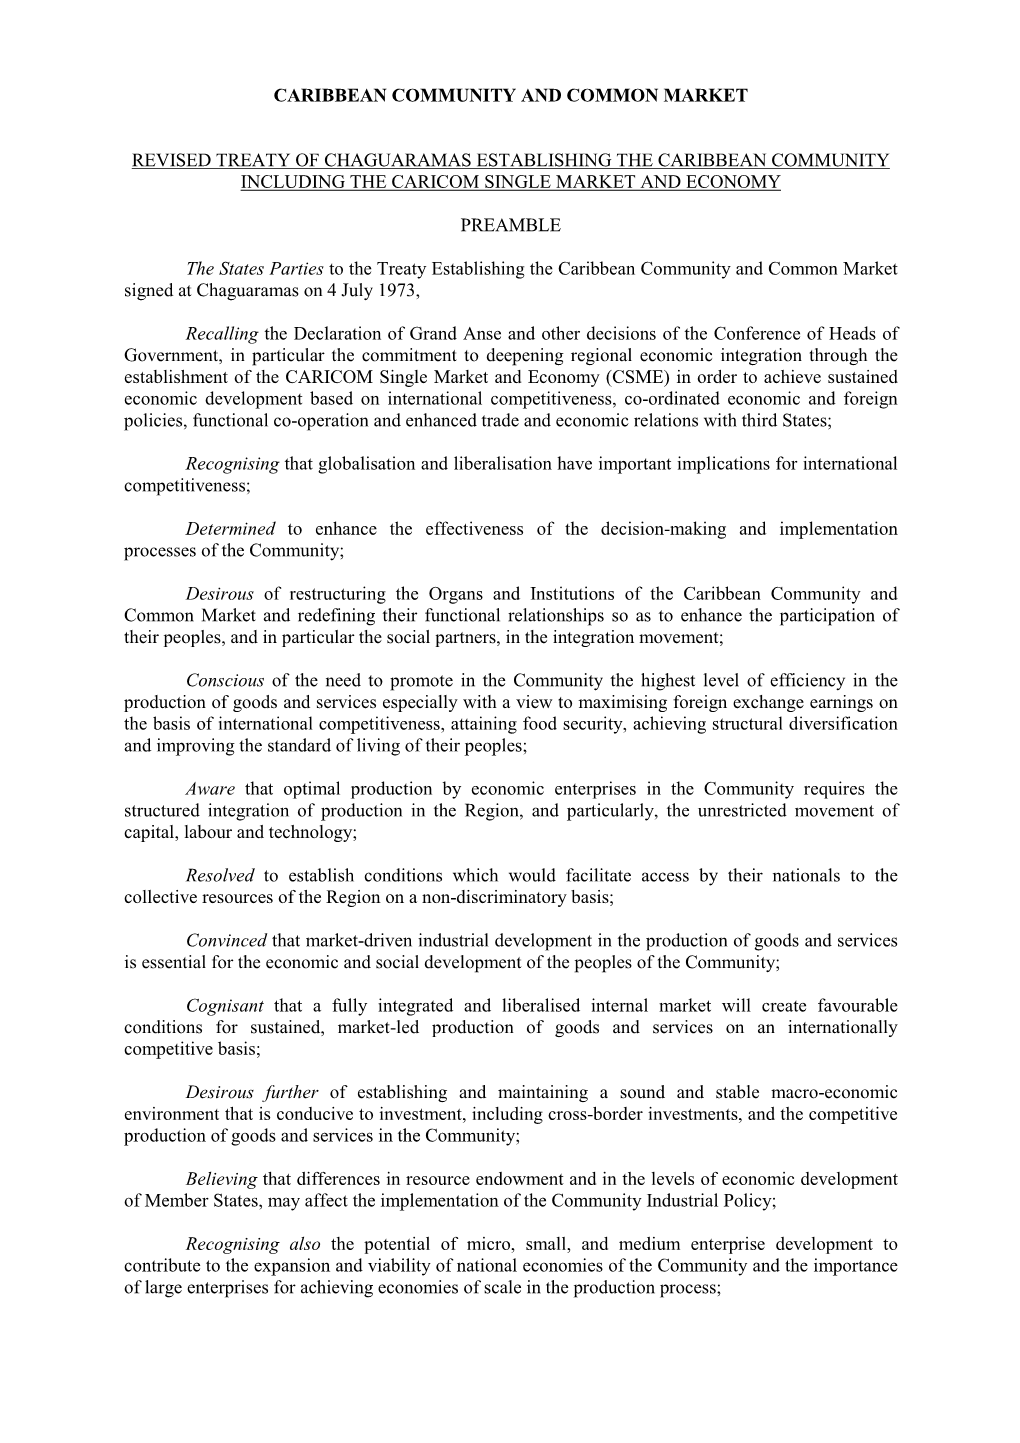 Revised Treaty of Chaguaramas Establishing the Caribbean Community Including the Caricom Single Market and Economy